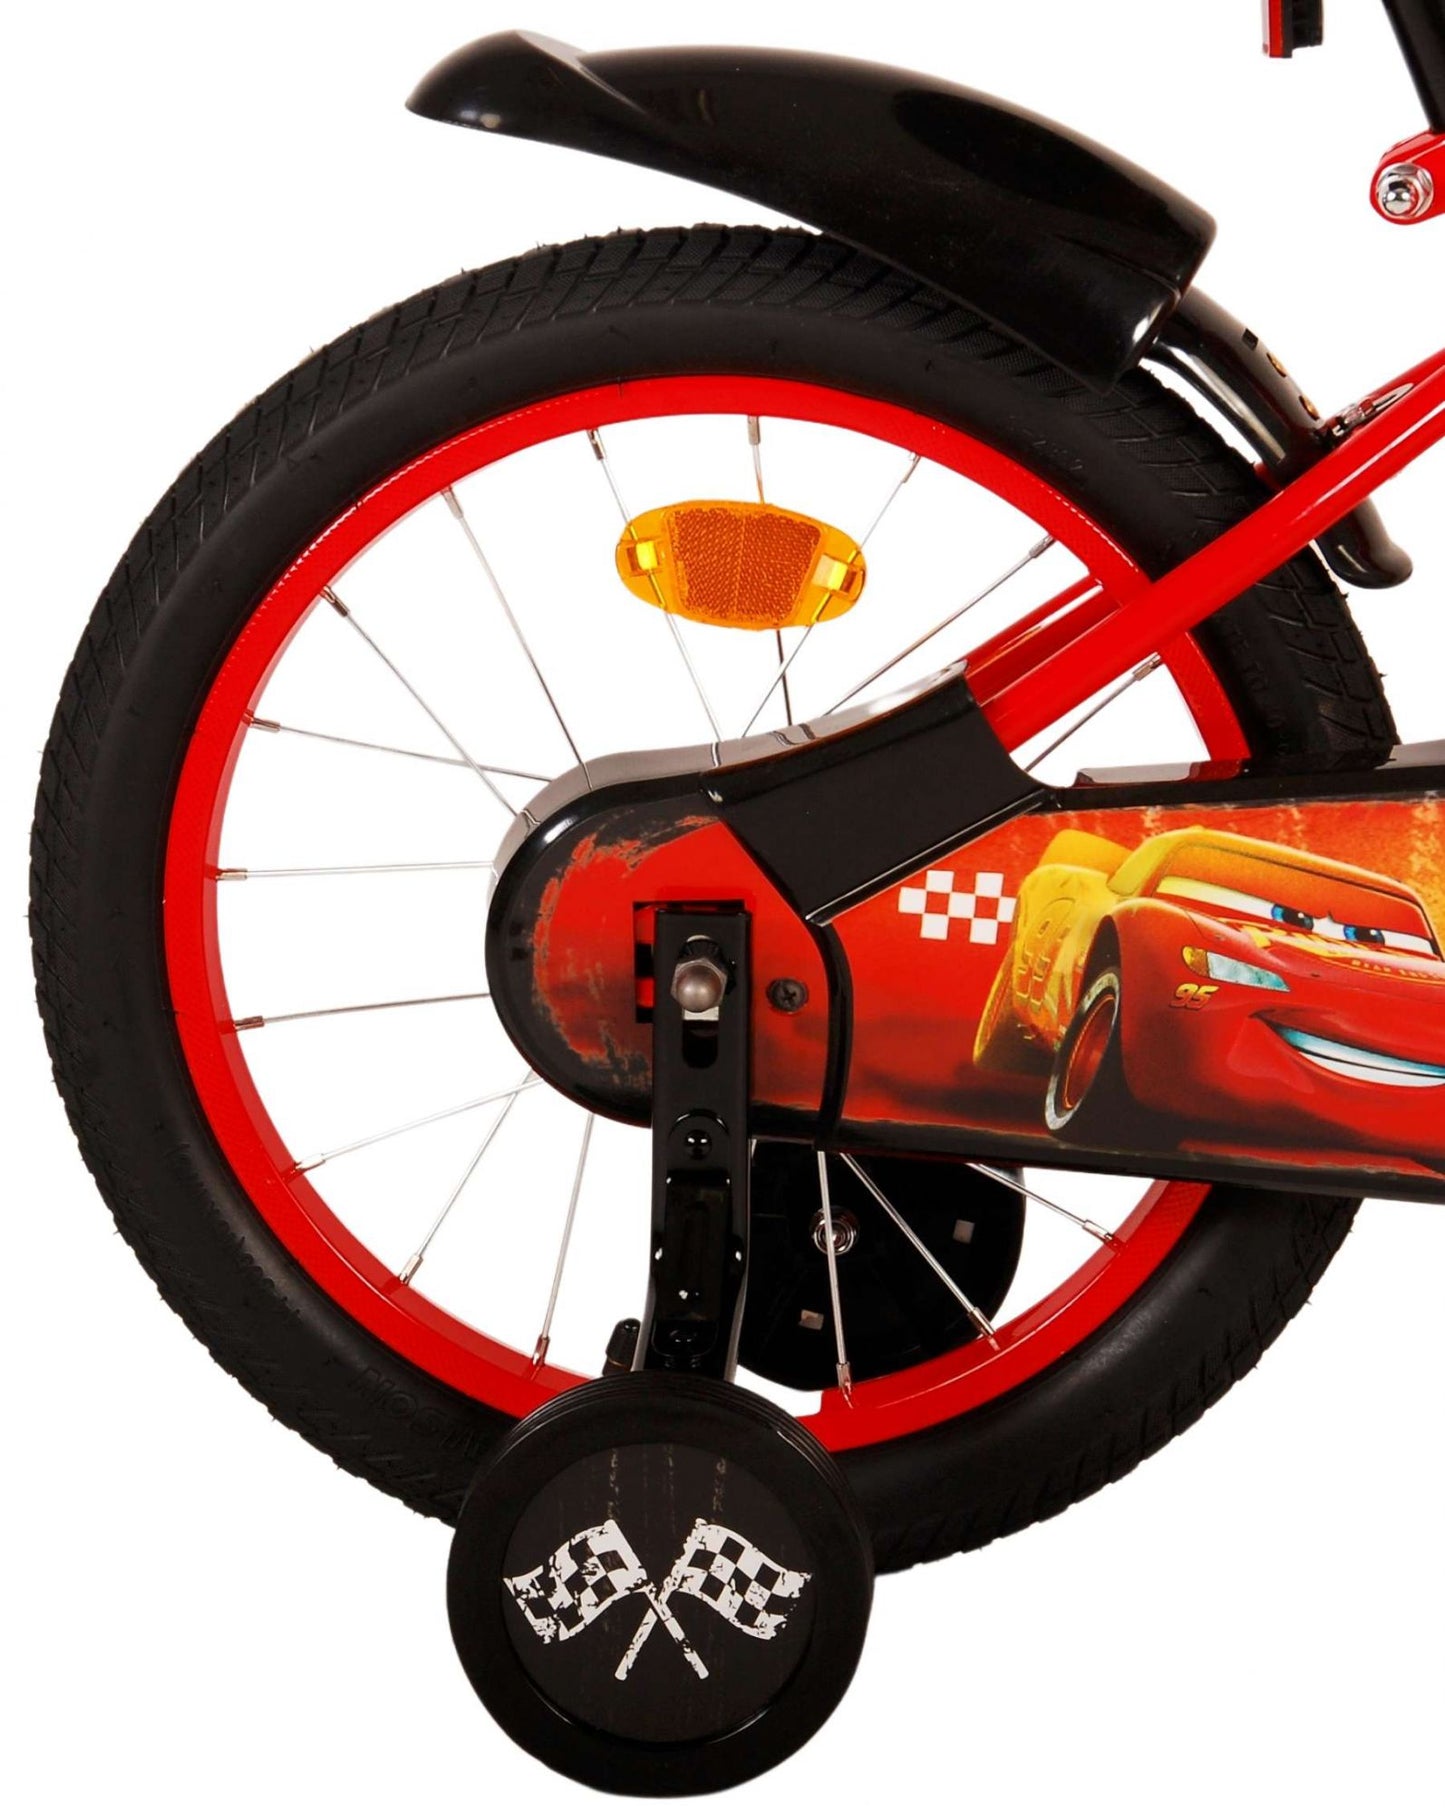 Bike per bambini Disney Cars - Boys - 16 pollici - rosso